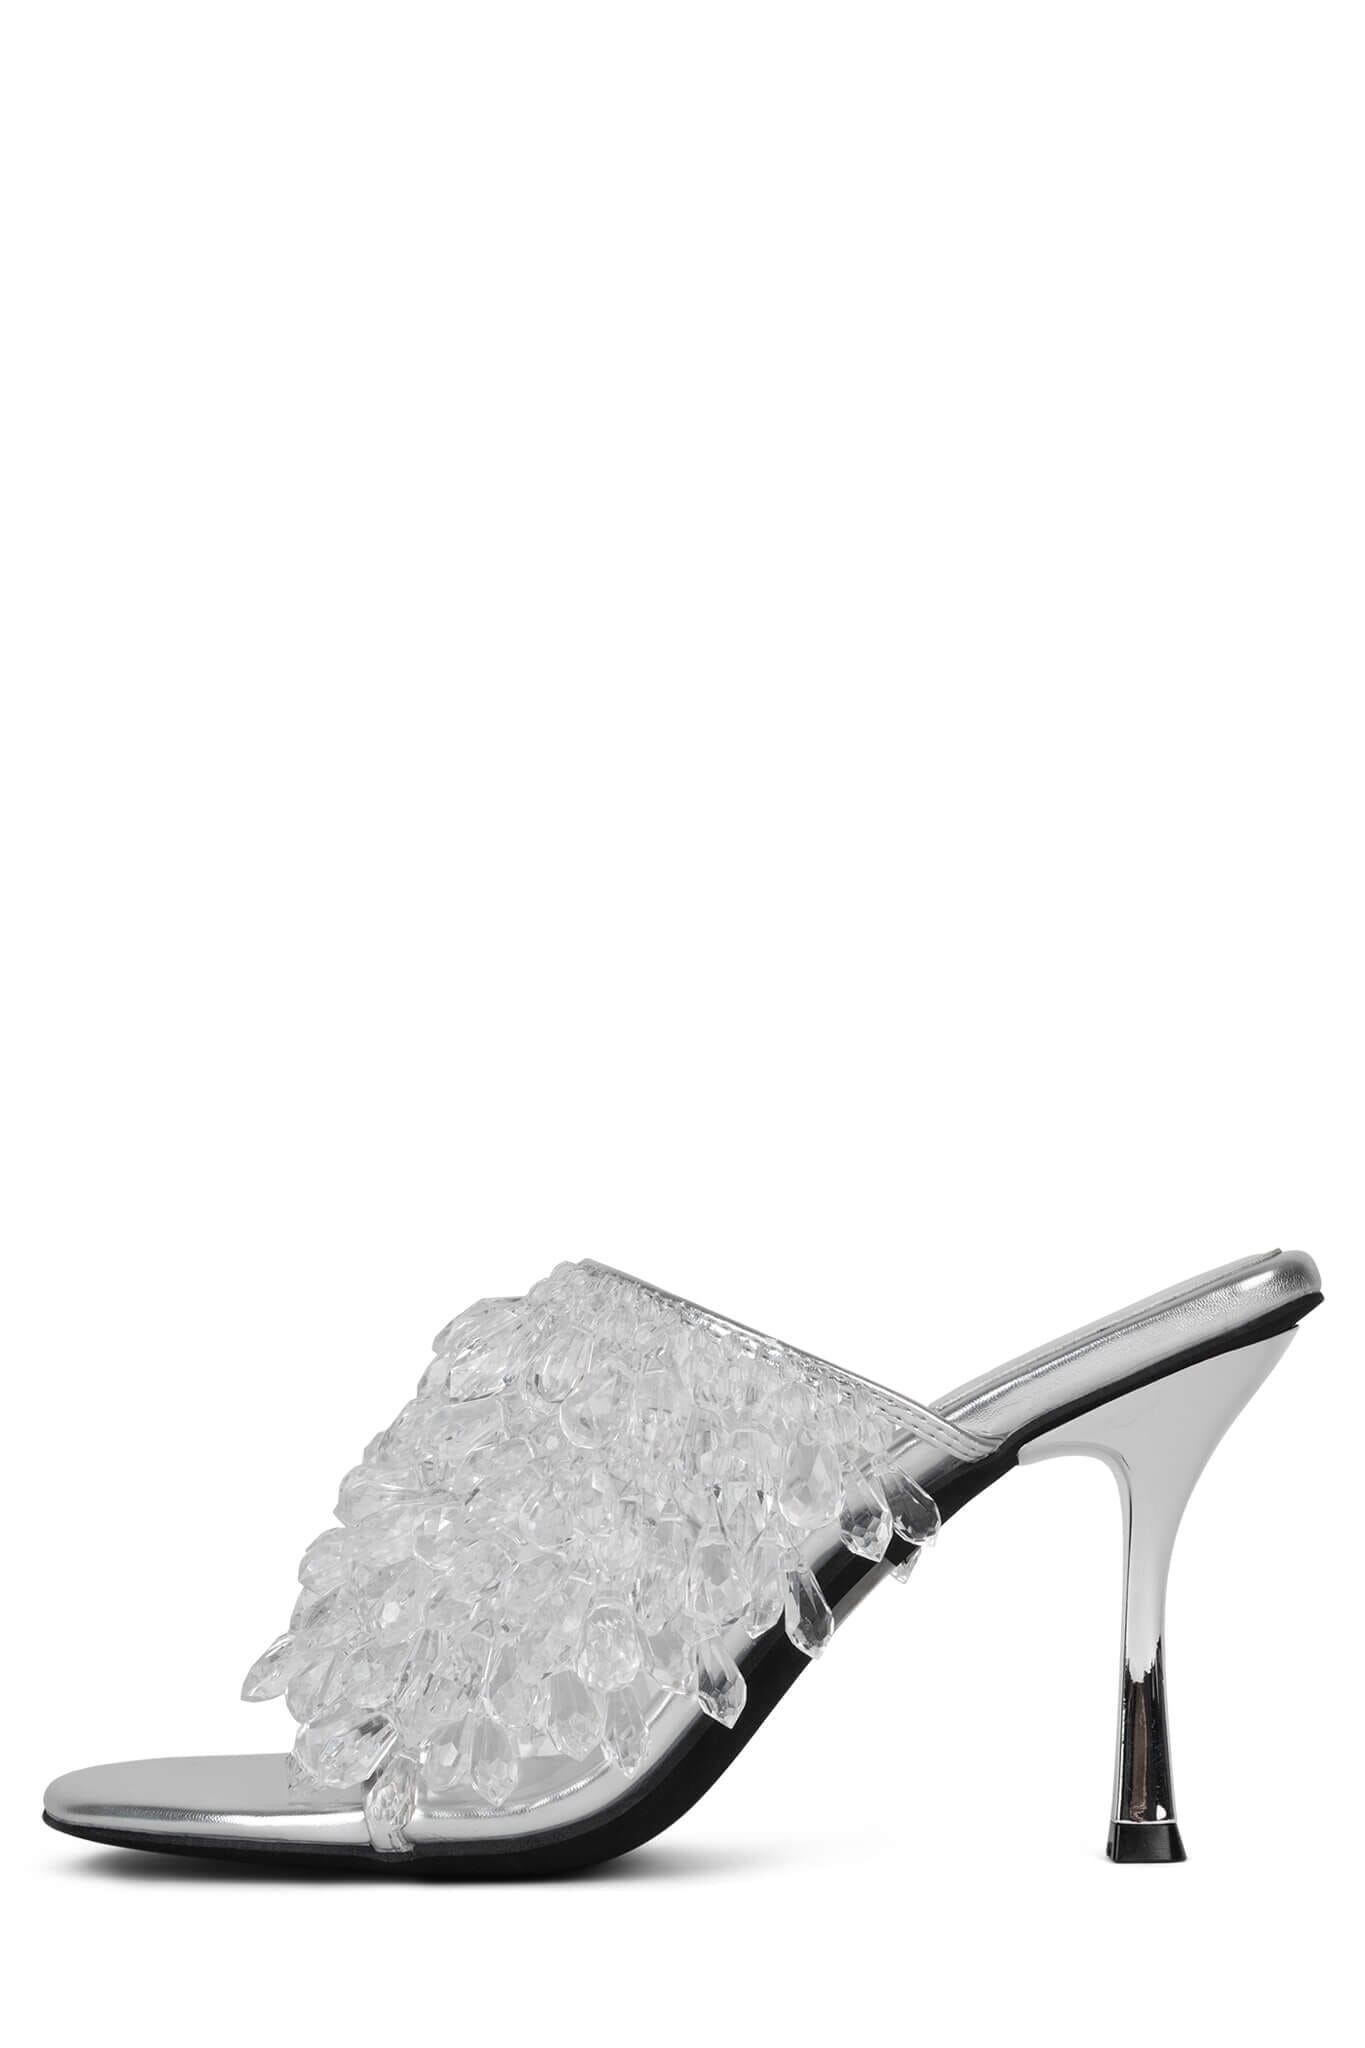 CRYSTLZ Jeffrey Campbell Sandals with heels